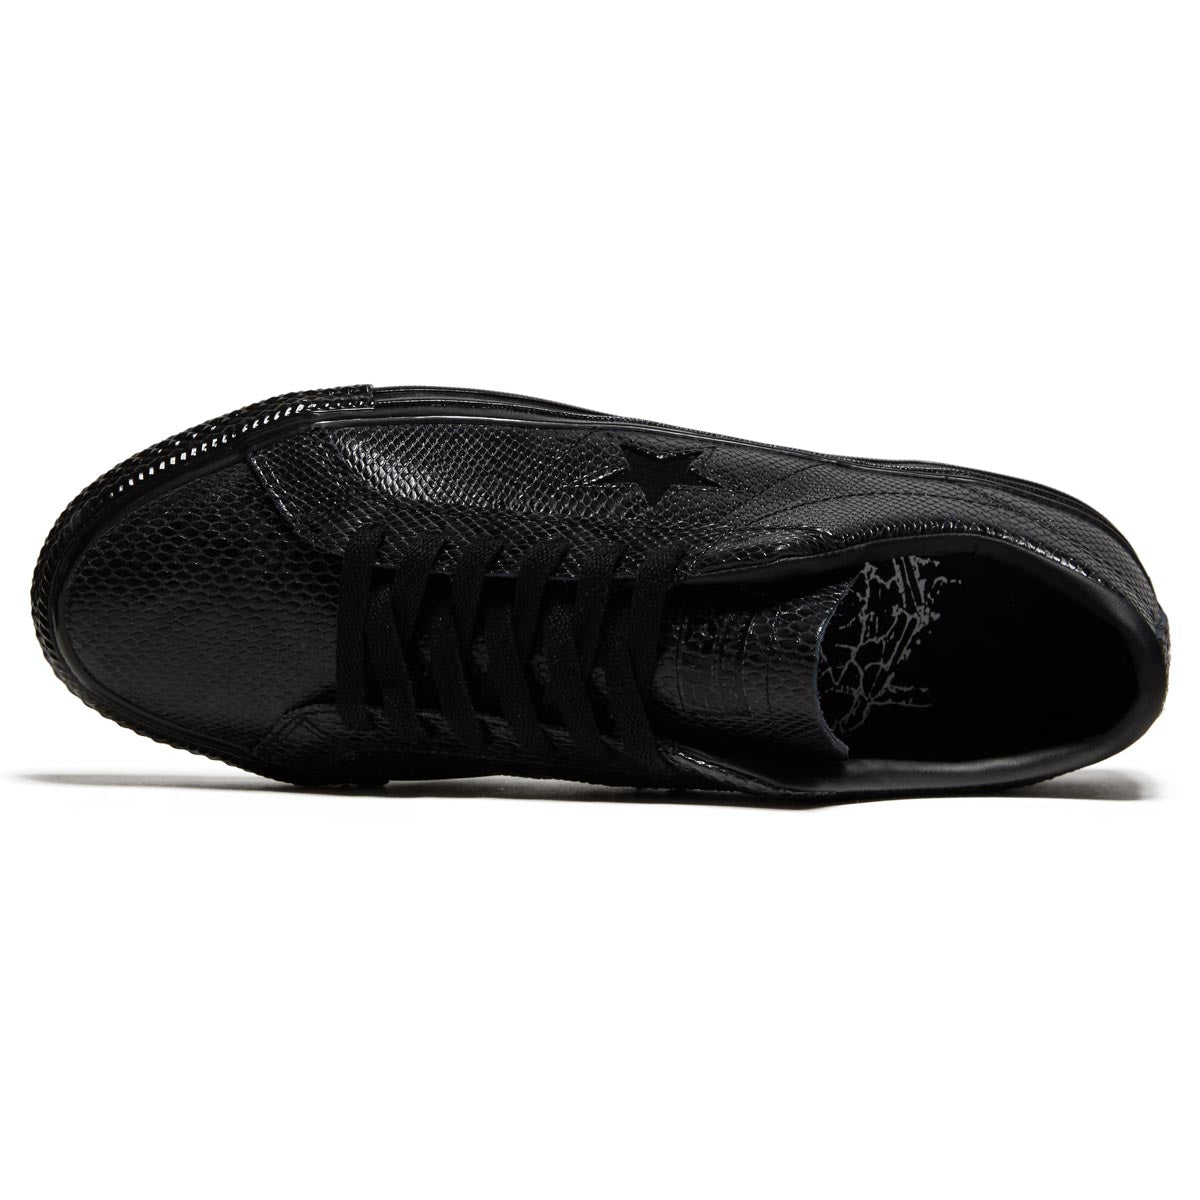 Converse One Star Pro Ox Shoes - Black/Black/Black/White image 3